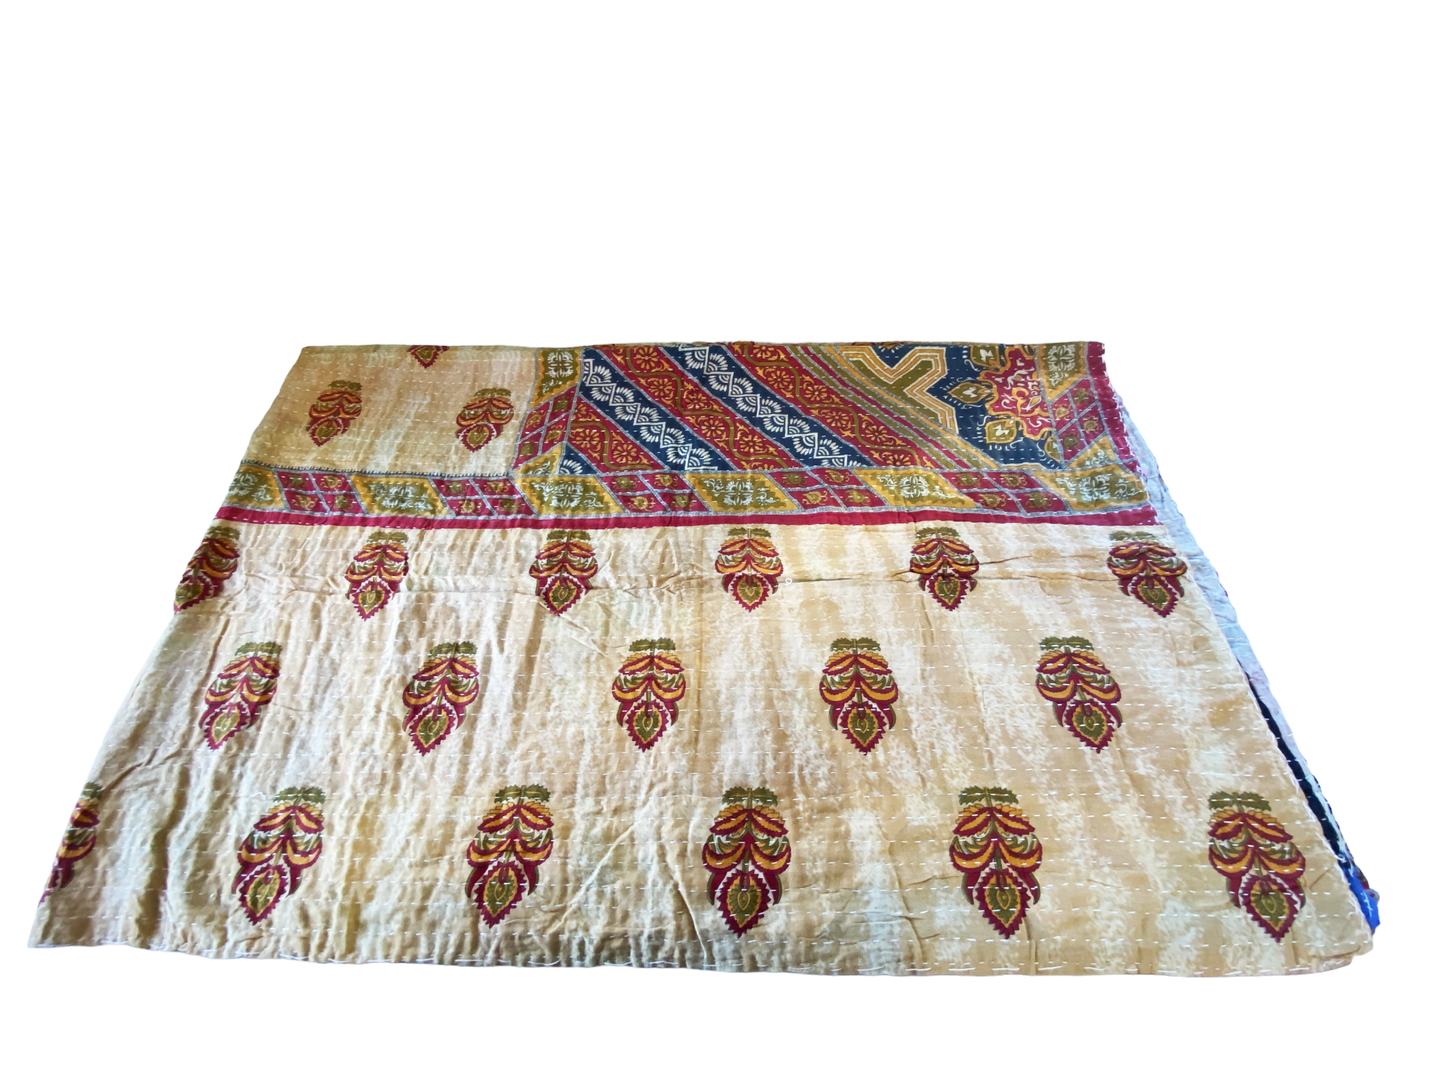 # 5195 Vintage Indian CottonThrow Kantha Quilt